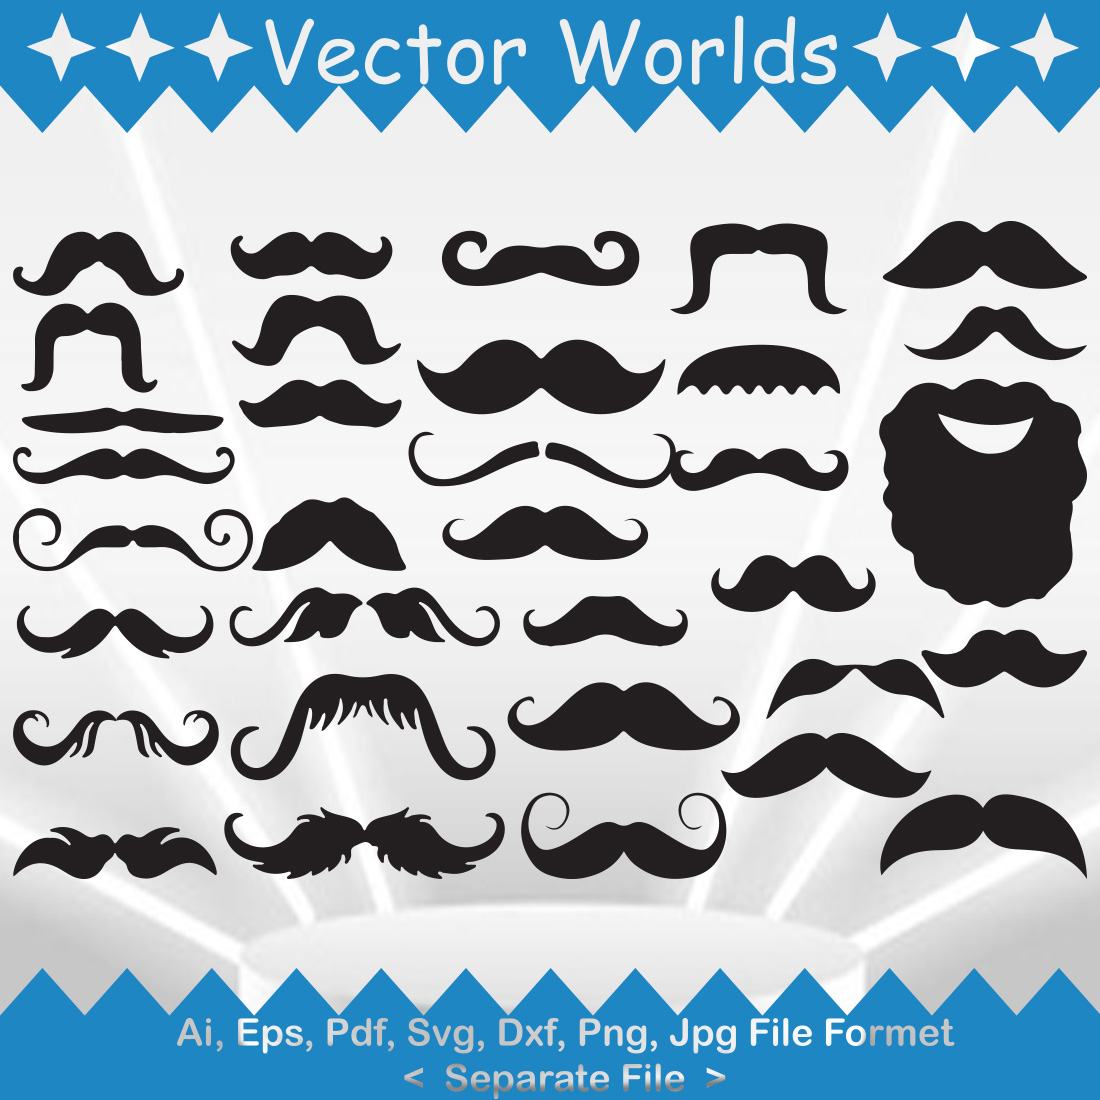 Mustache SVG Vector Design cover image.